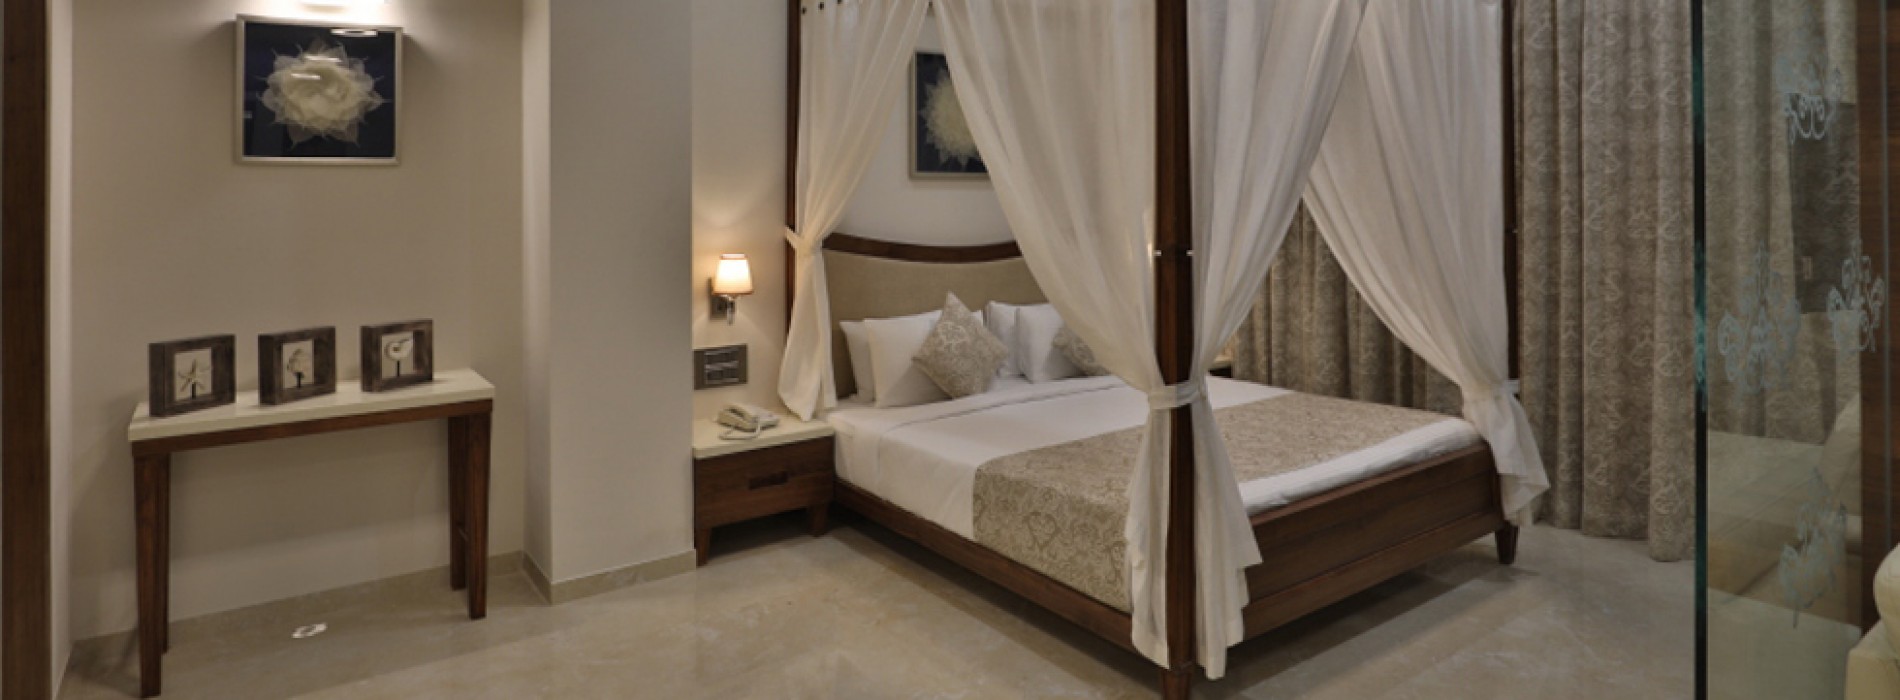 VITS Luxury Hotels announces launch of VITS Devbhumi in Dwarka